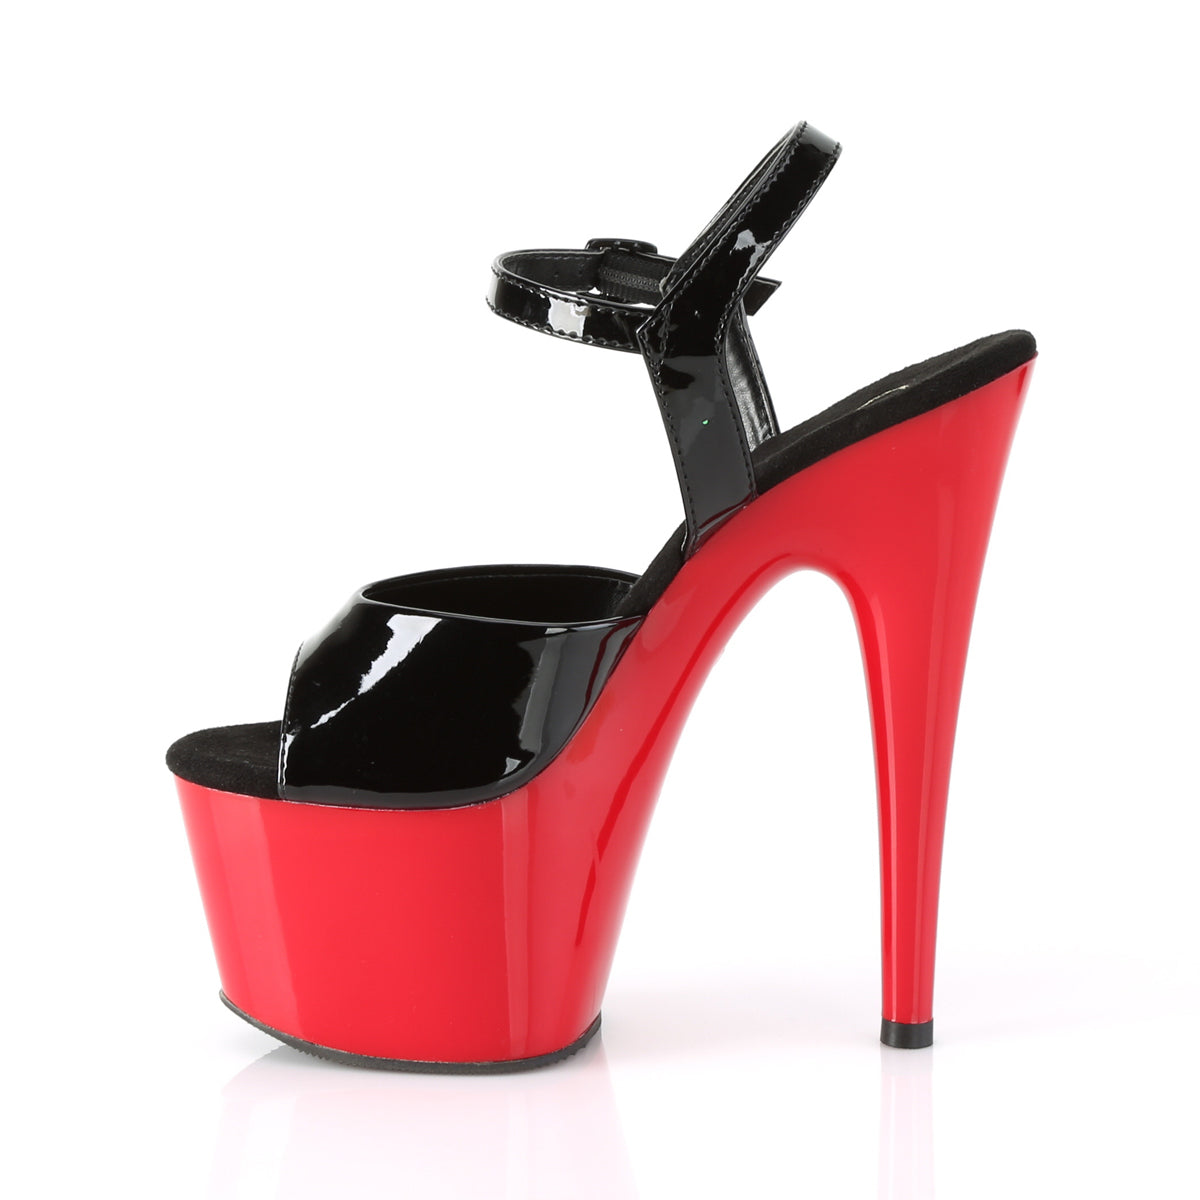 Black Patent Red Platform Sandals Adore-709